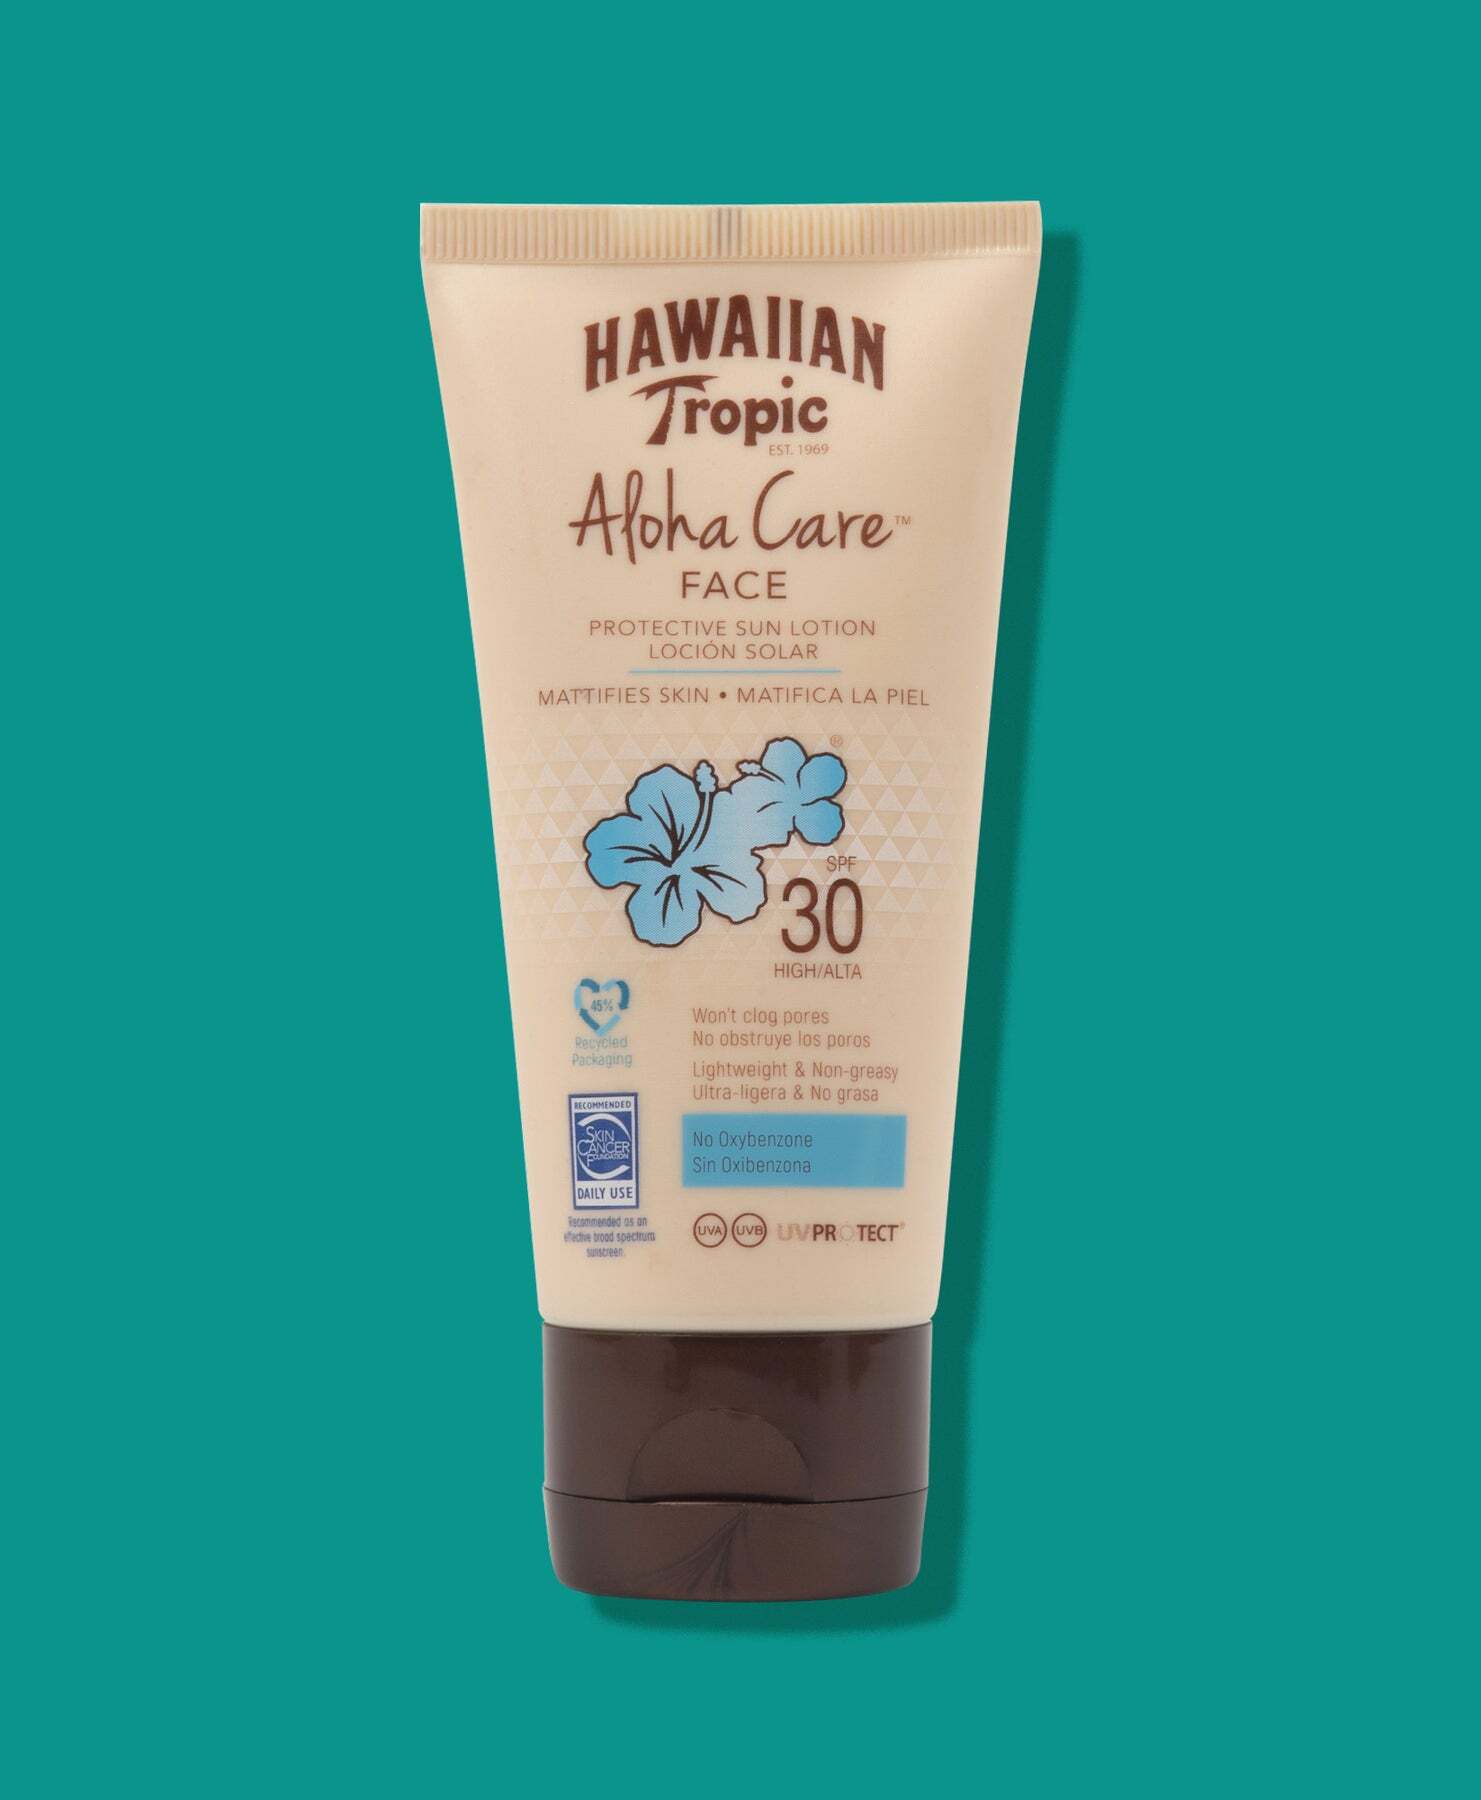 Hawaiian Tropic Aloha Care FACE Protective Sun Lotion SPF 30 90ml